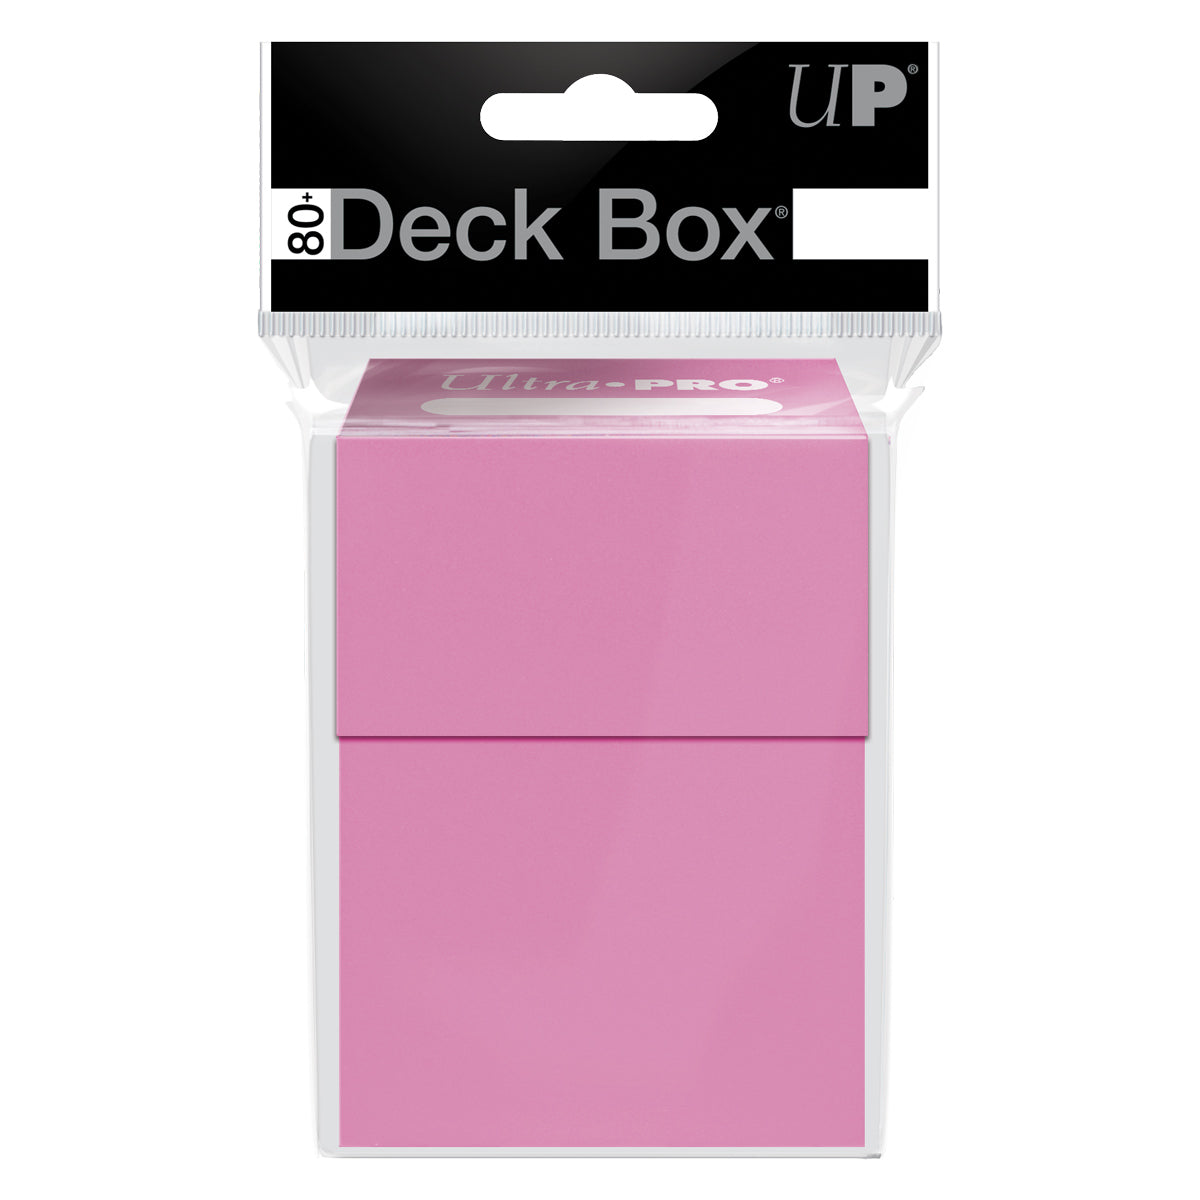 Ultra-Pro Pink Deck Box